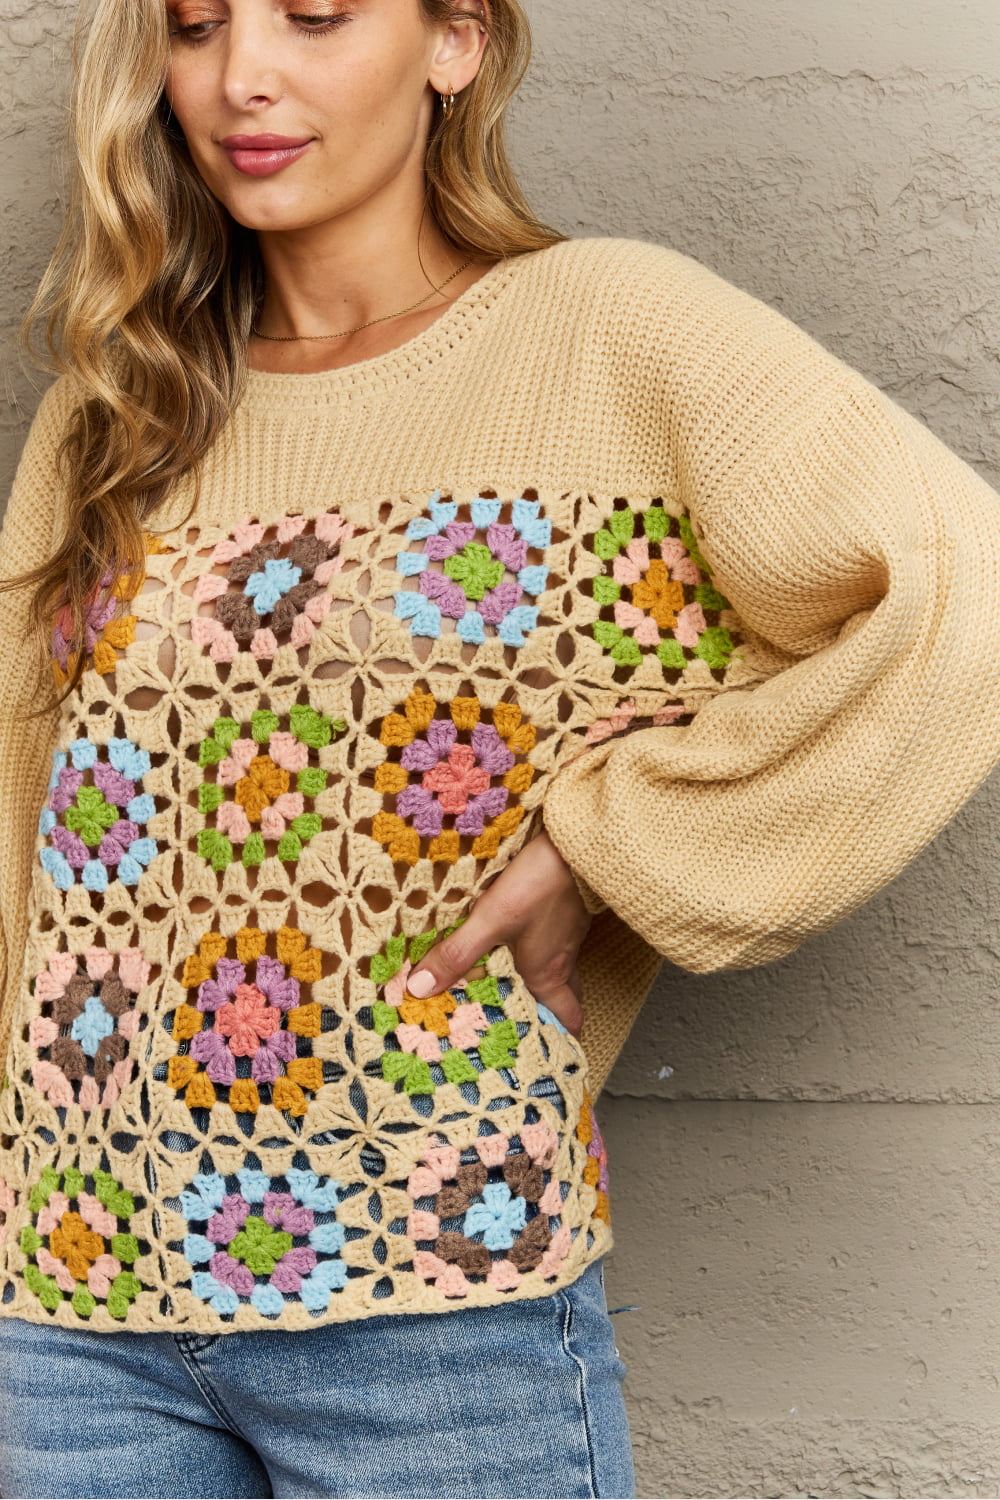 HEYSON More To Come Crochet Sweater Pullover